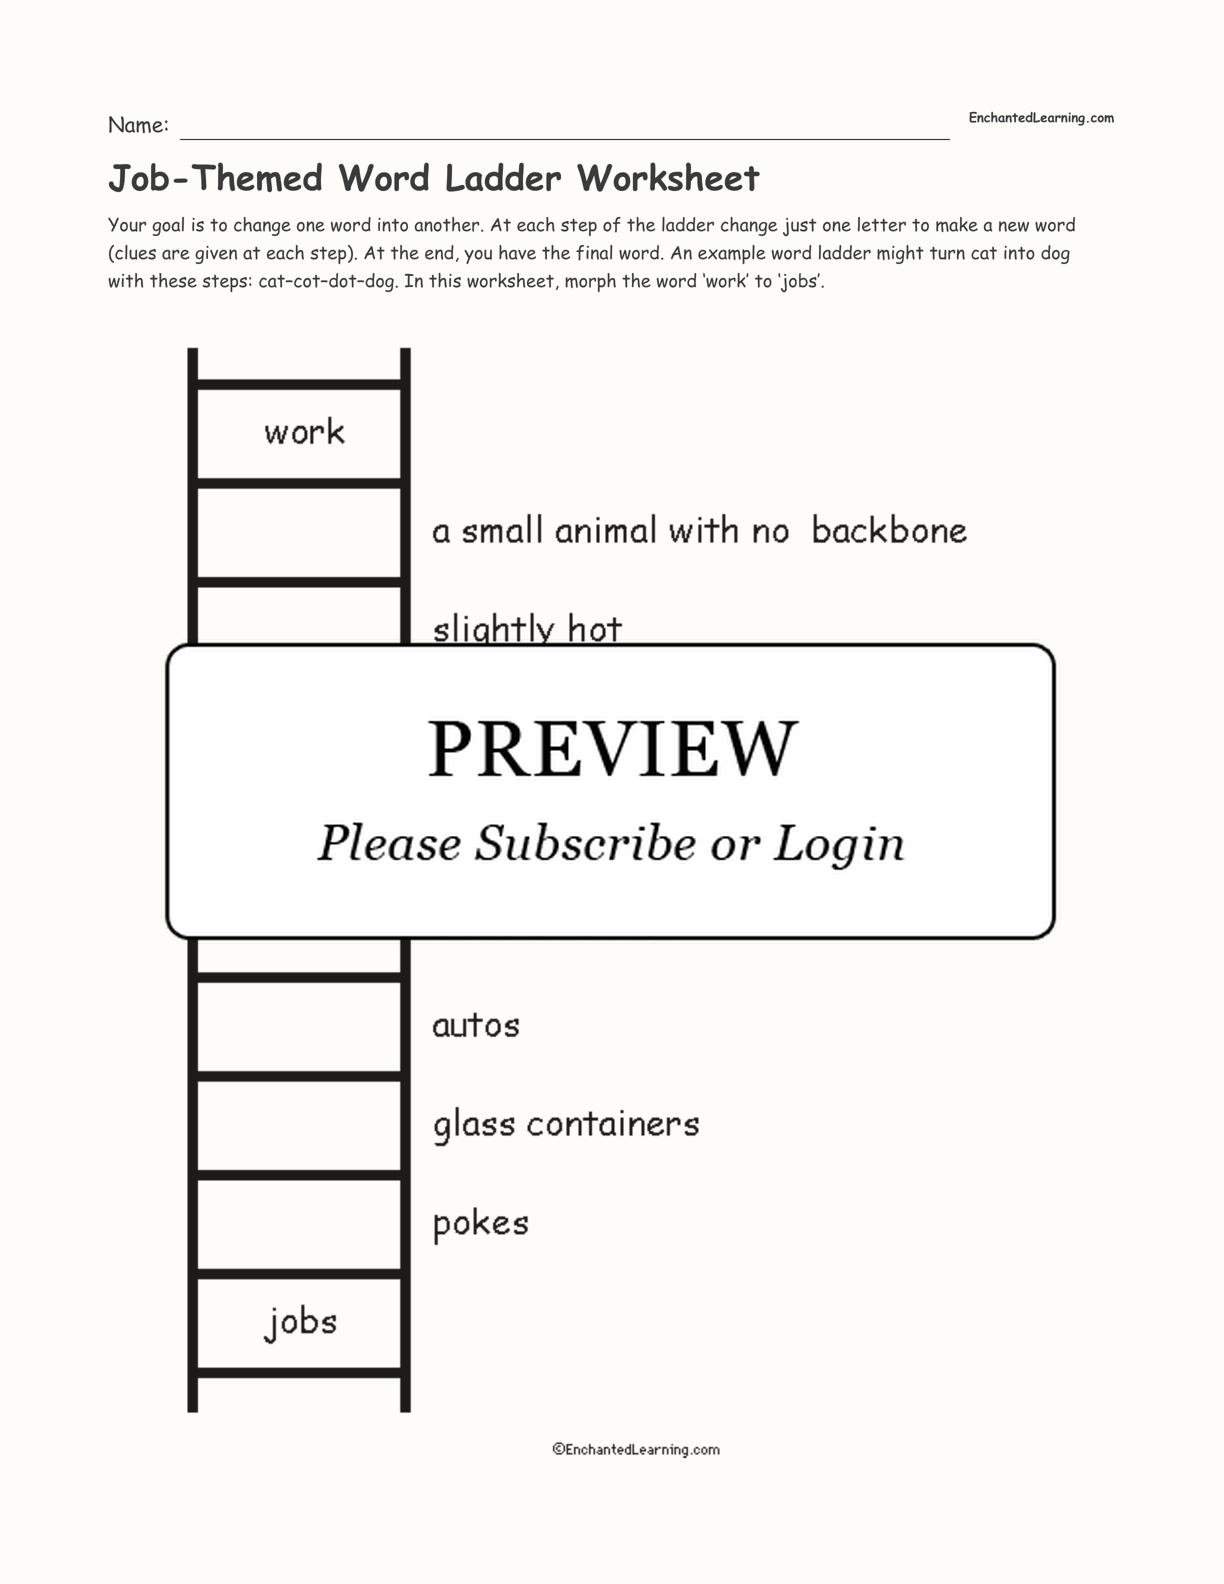 Job-Themed Word Ladder Worksheet interactive worksheet page 1